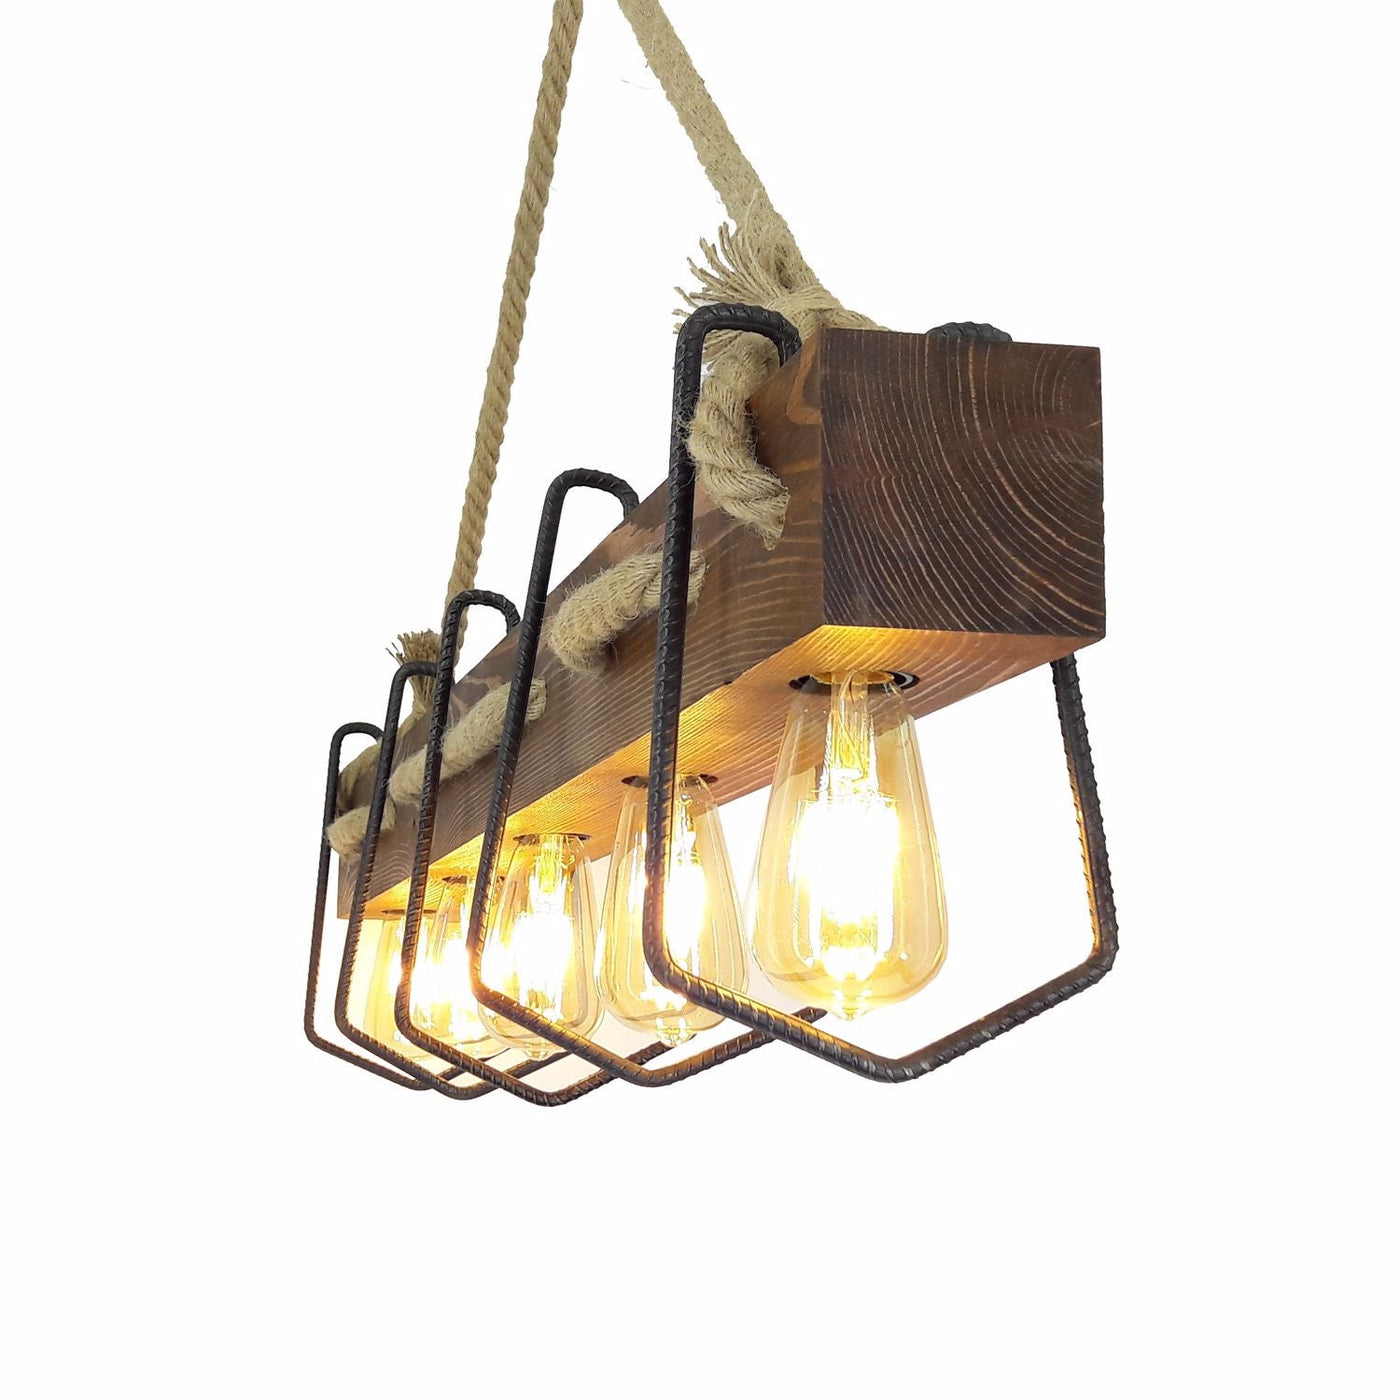 HT107 | Industriële hanglamp, hout, retro design | 5x E27-lampen